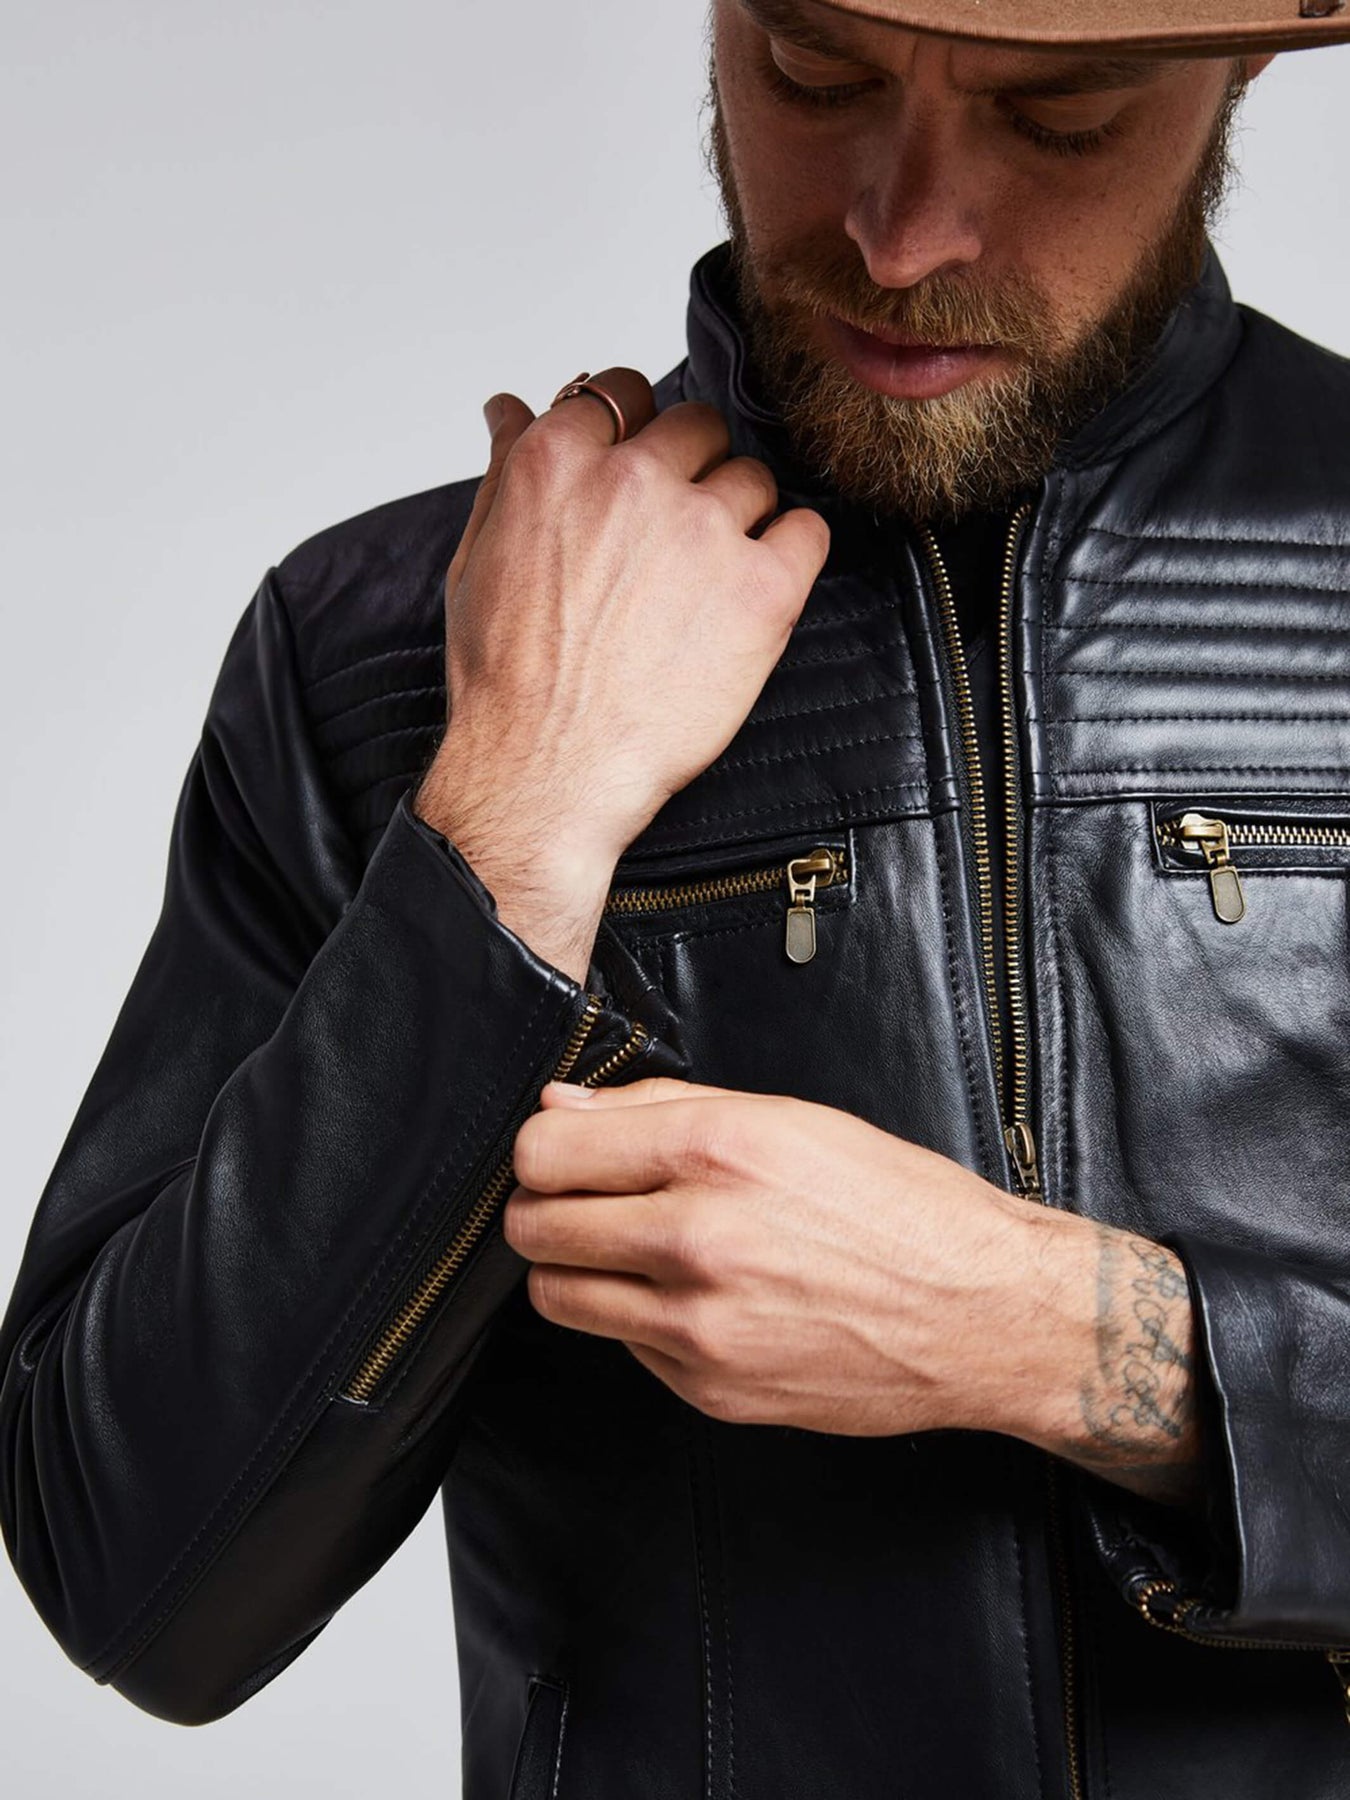 Bullet Resistant Men's Leather Jacket | Innocent Armor